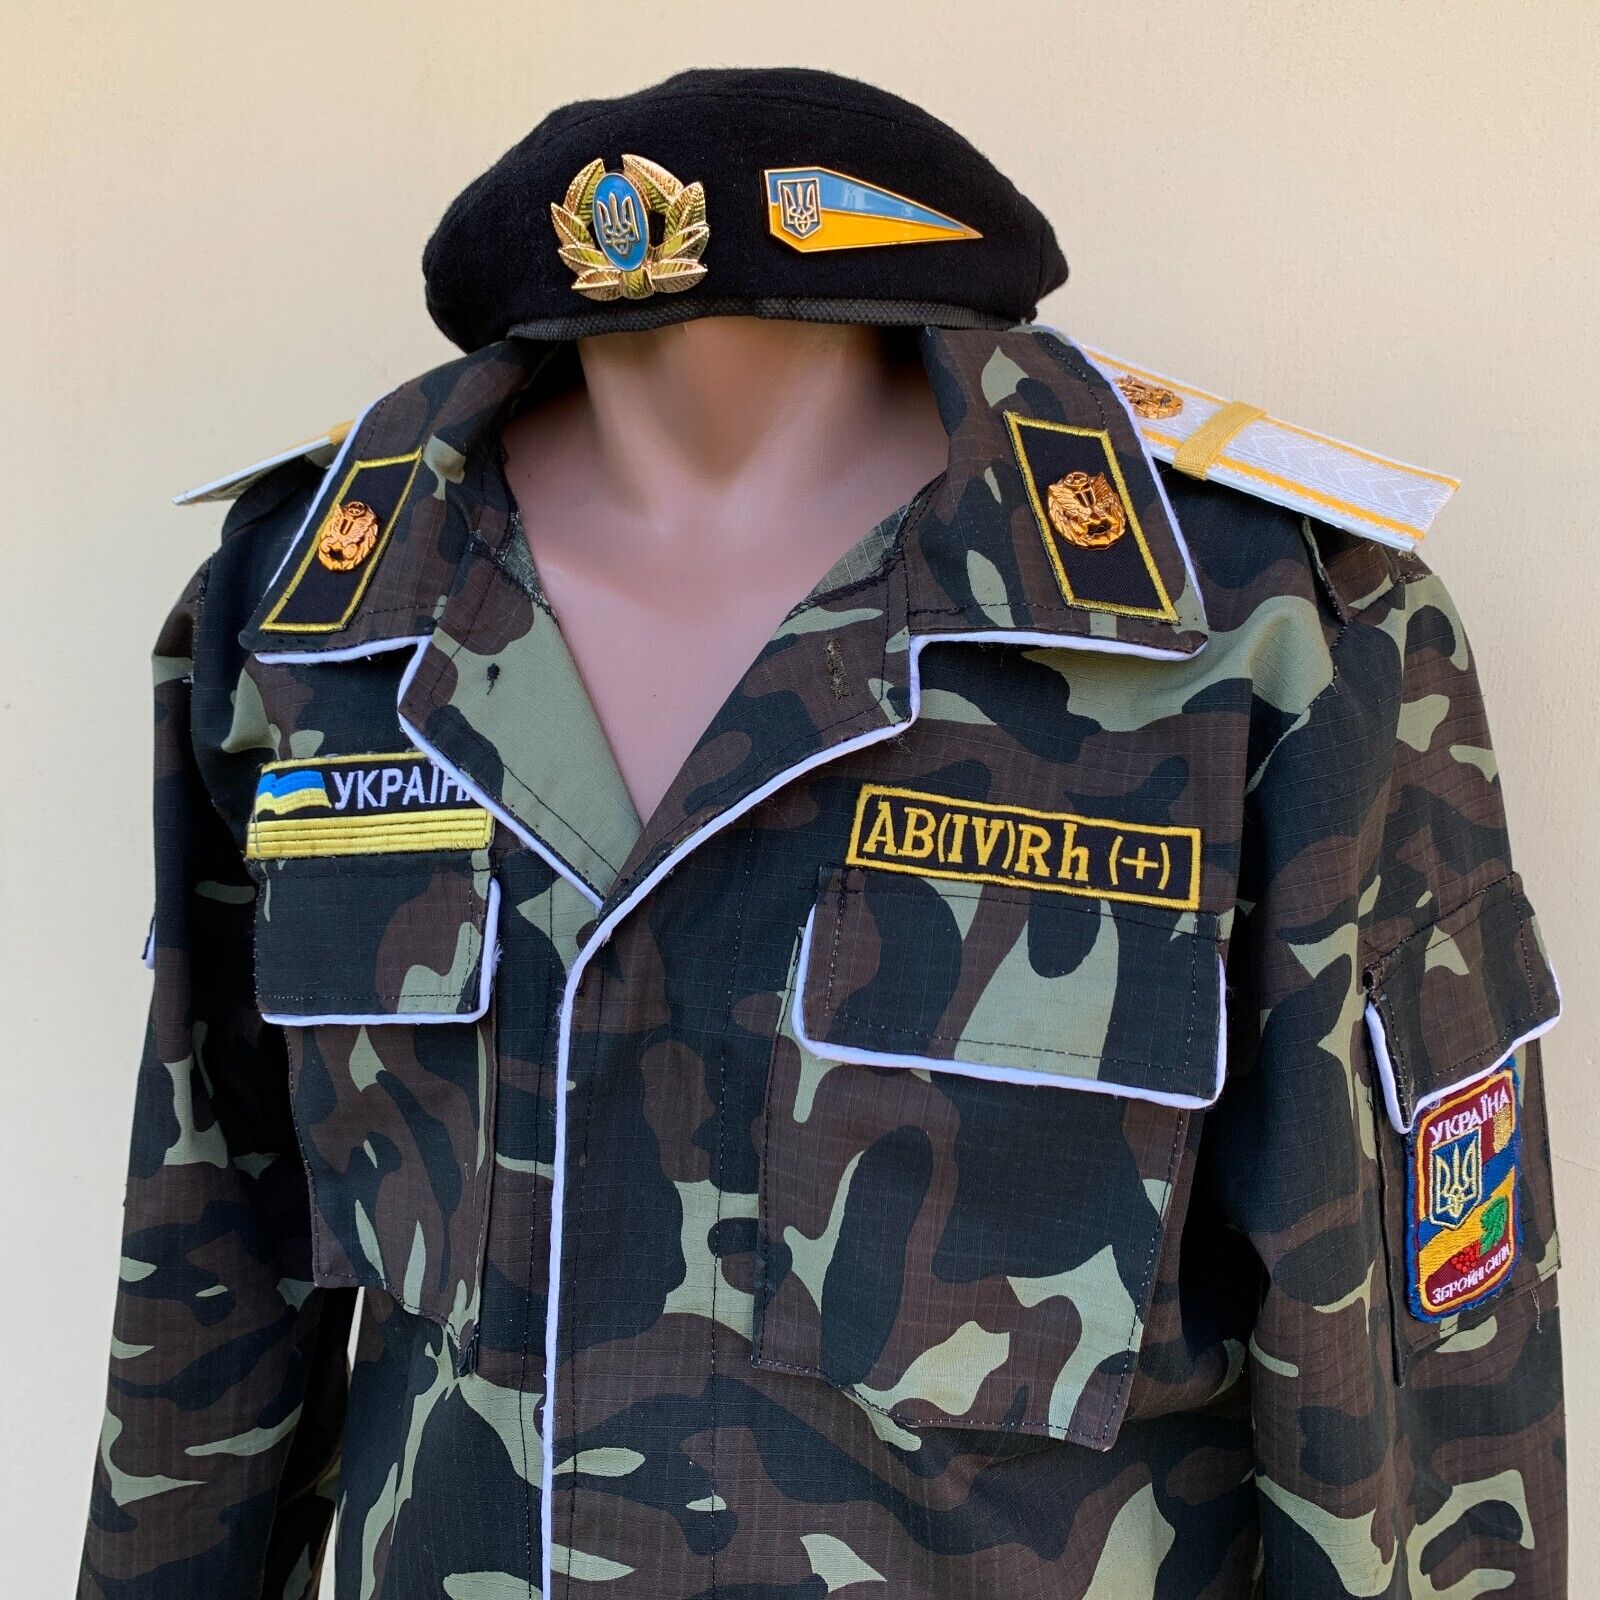 Vtg Ukrainian Army Military Solider Jacket and Beret Cap Uniform Set. Original